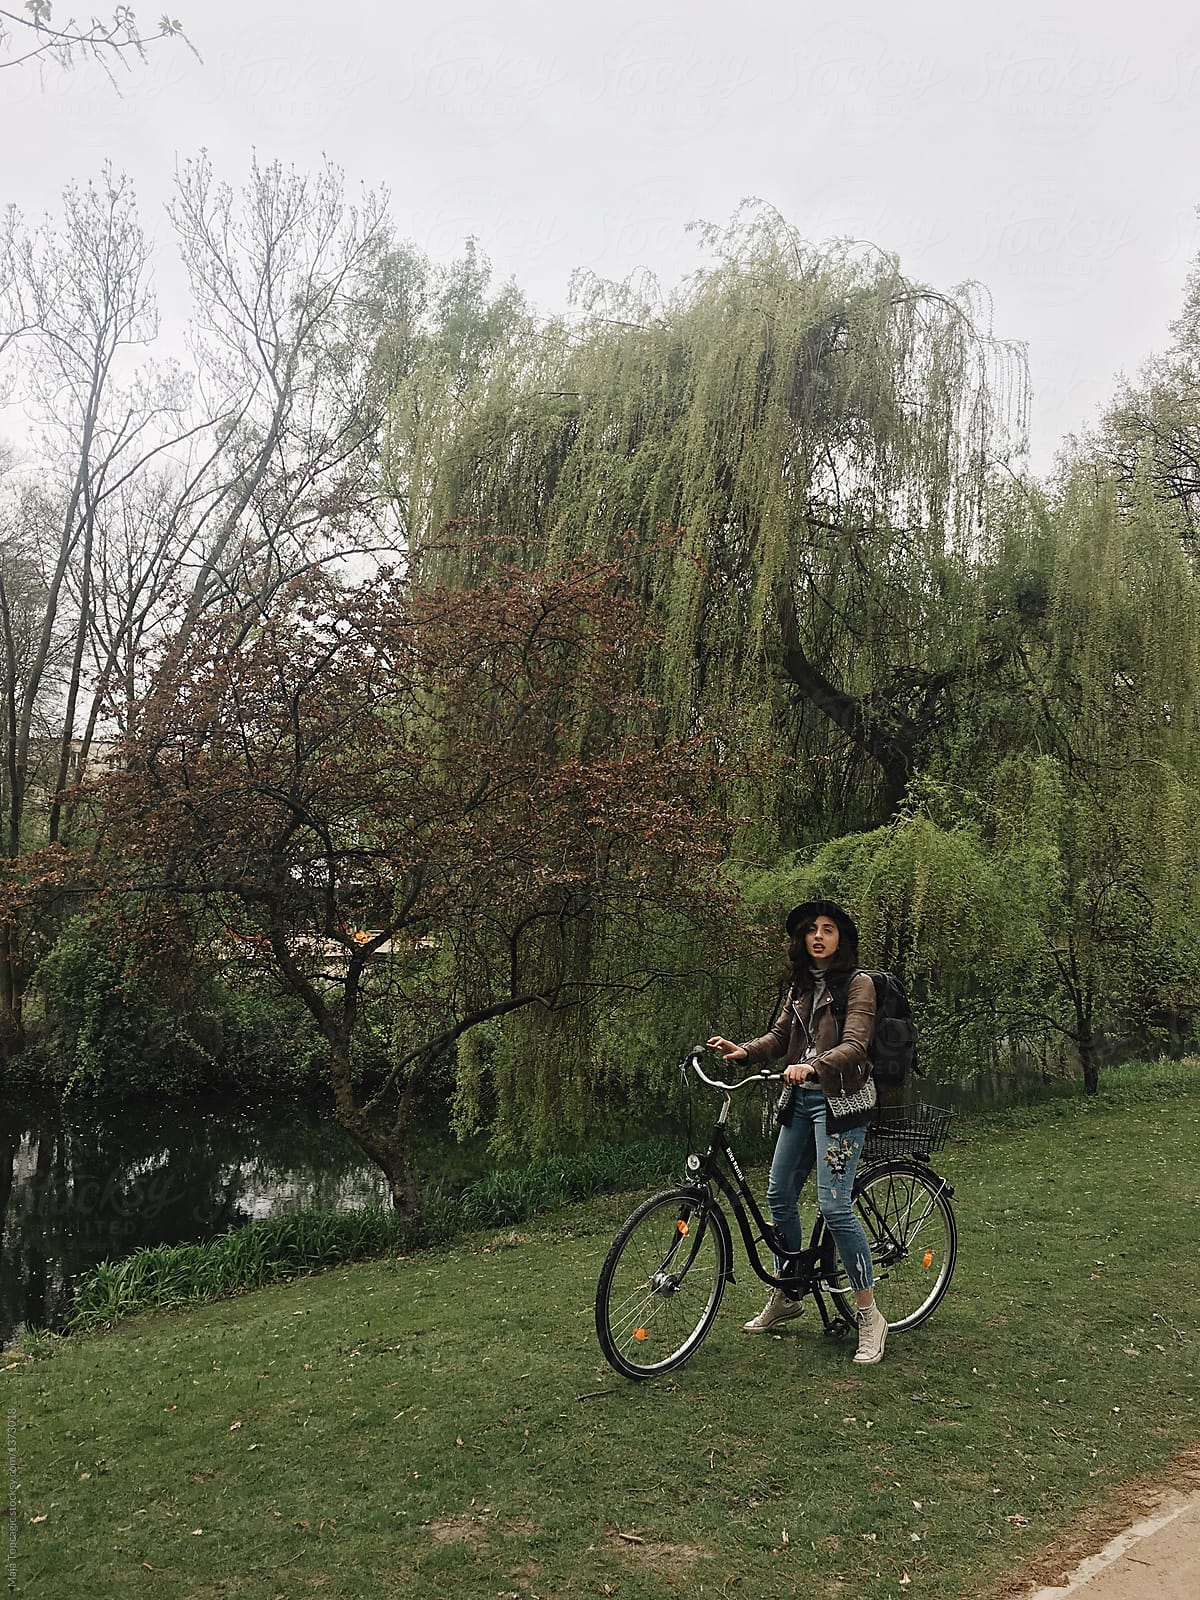 Woman riding a bicycle through park